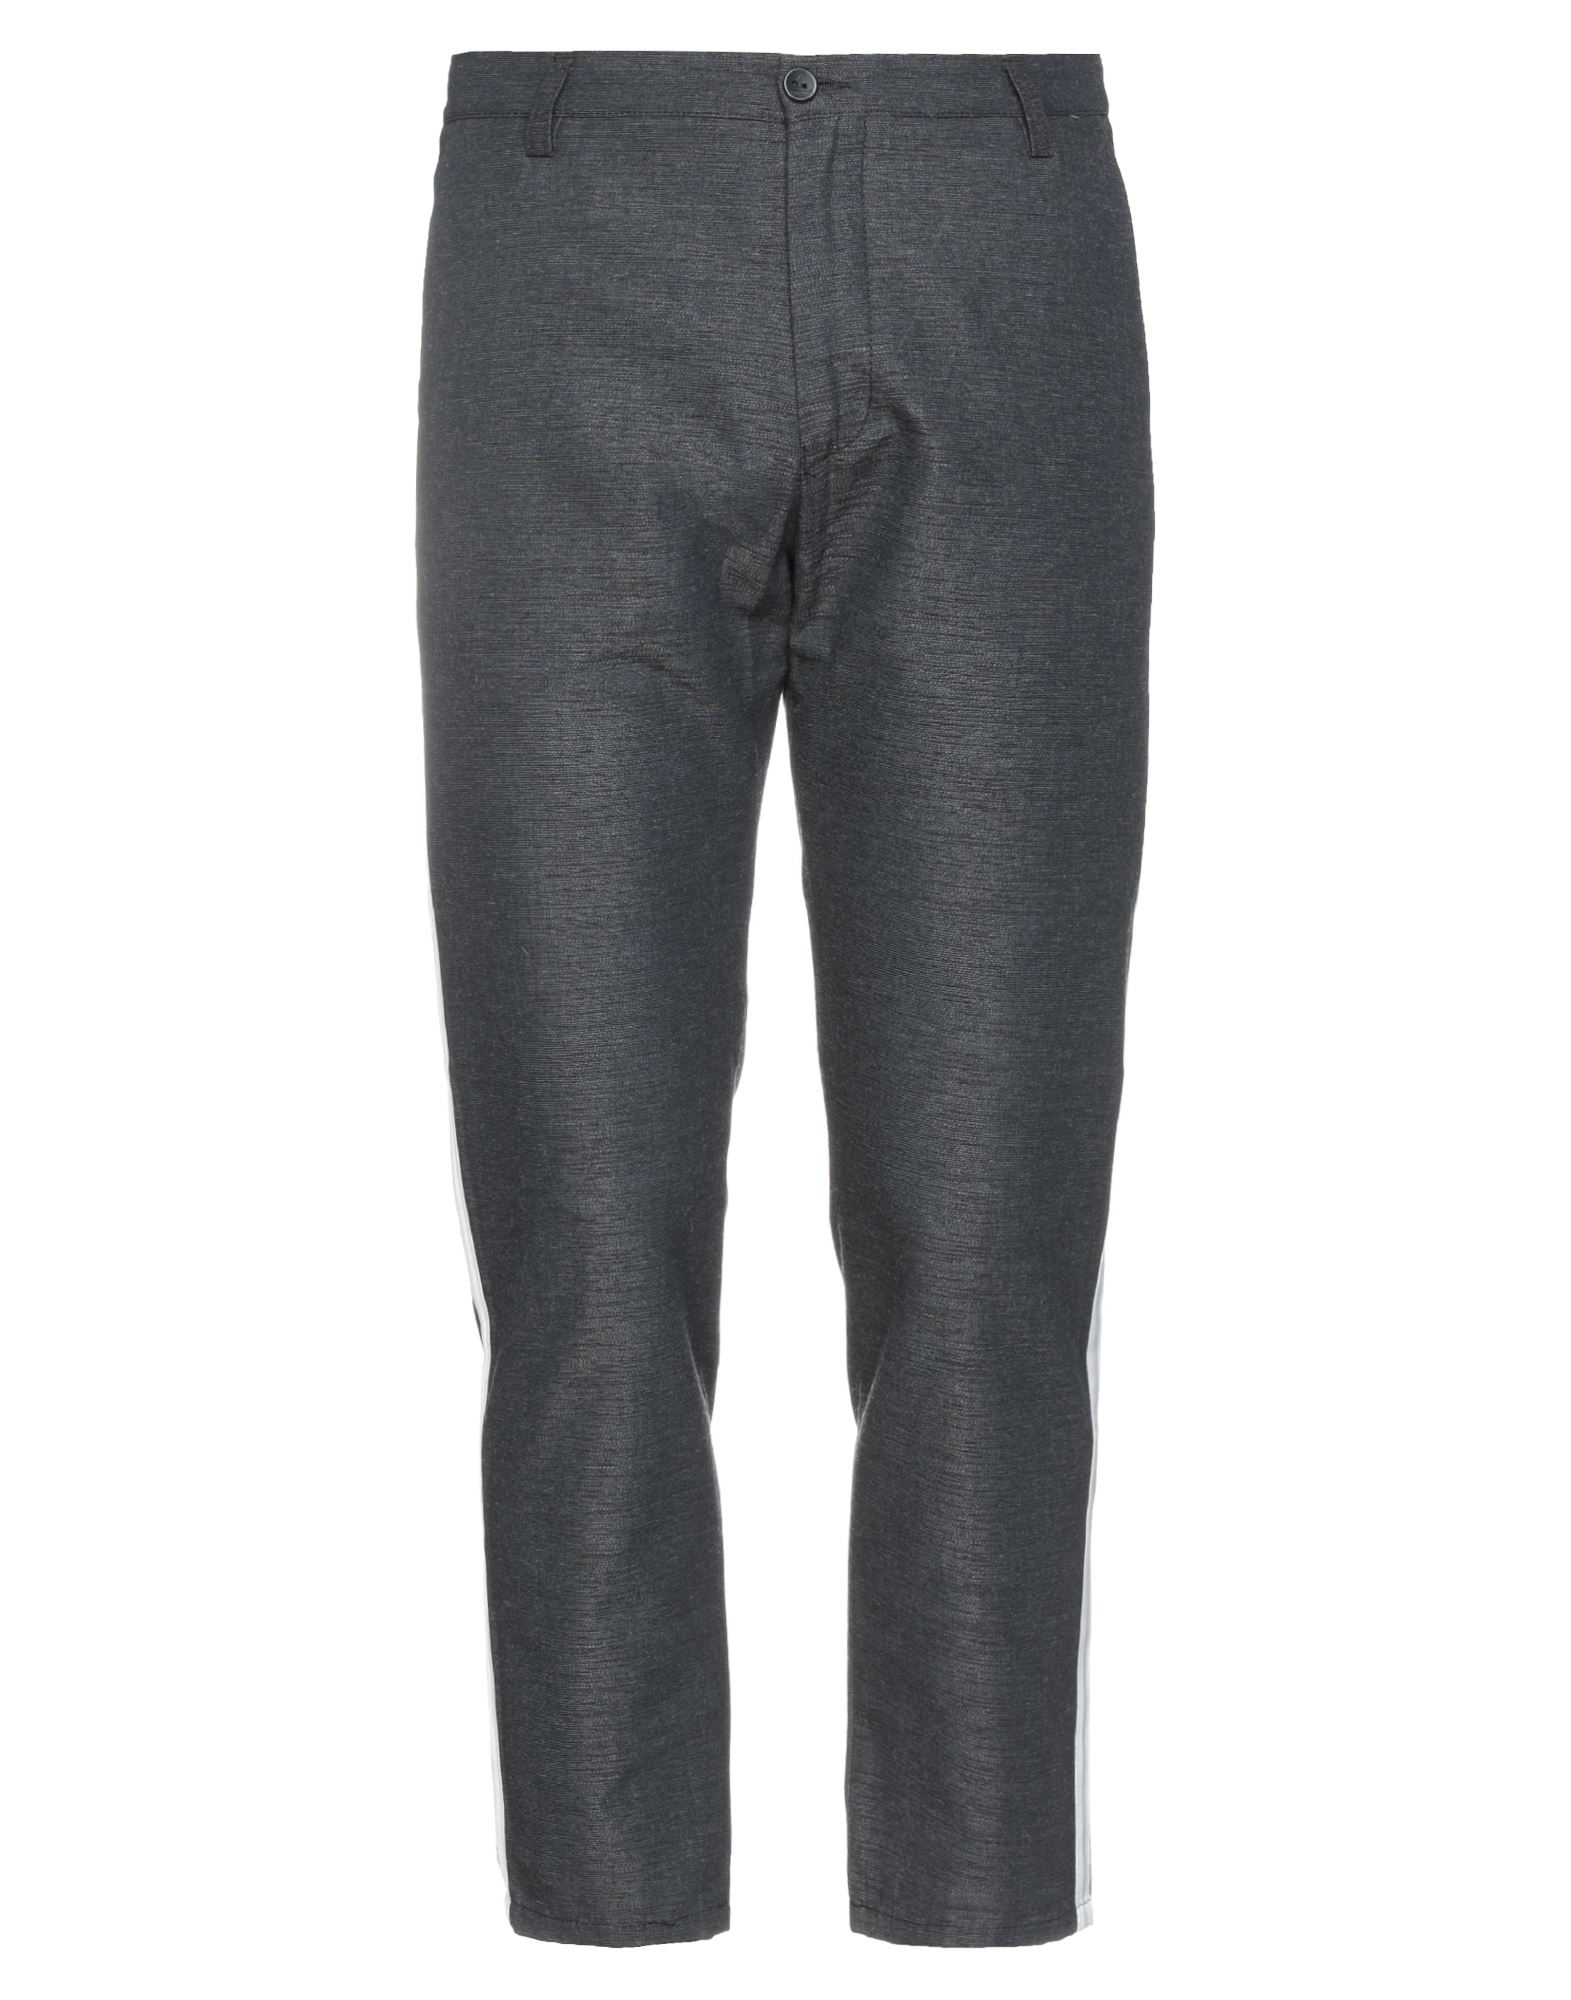 Choice Pants In Grey